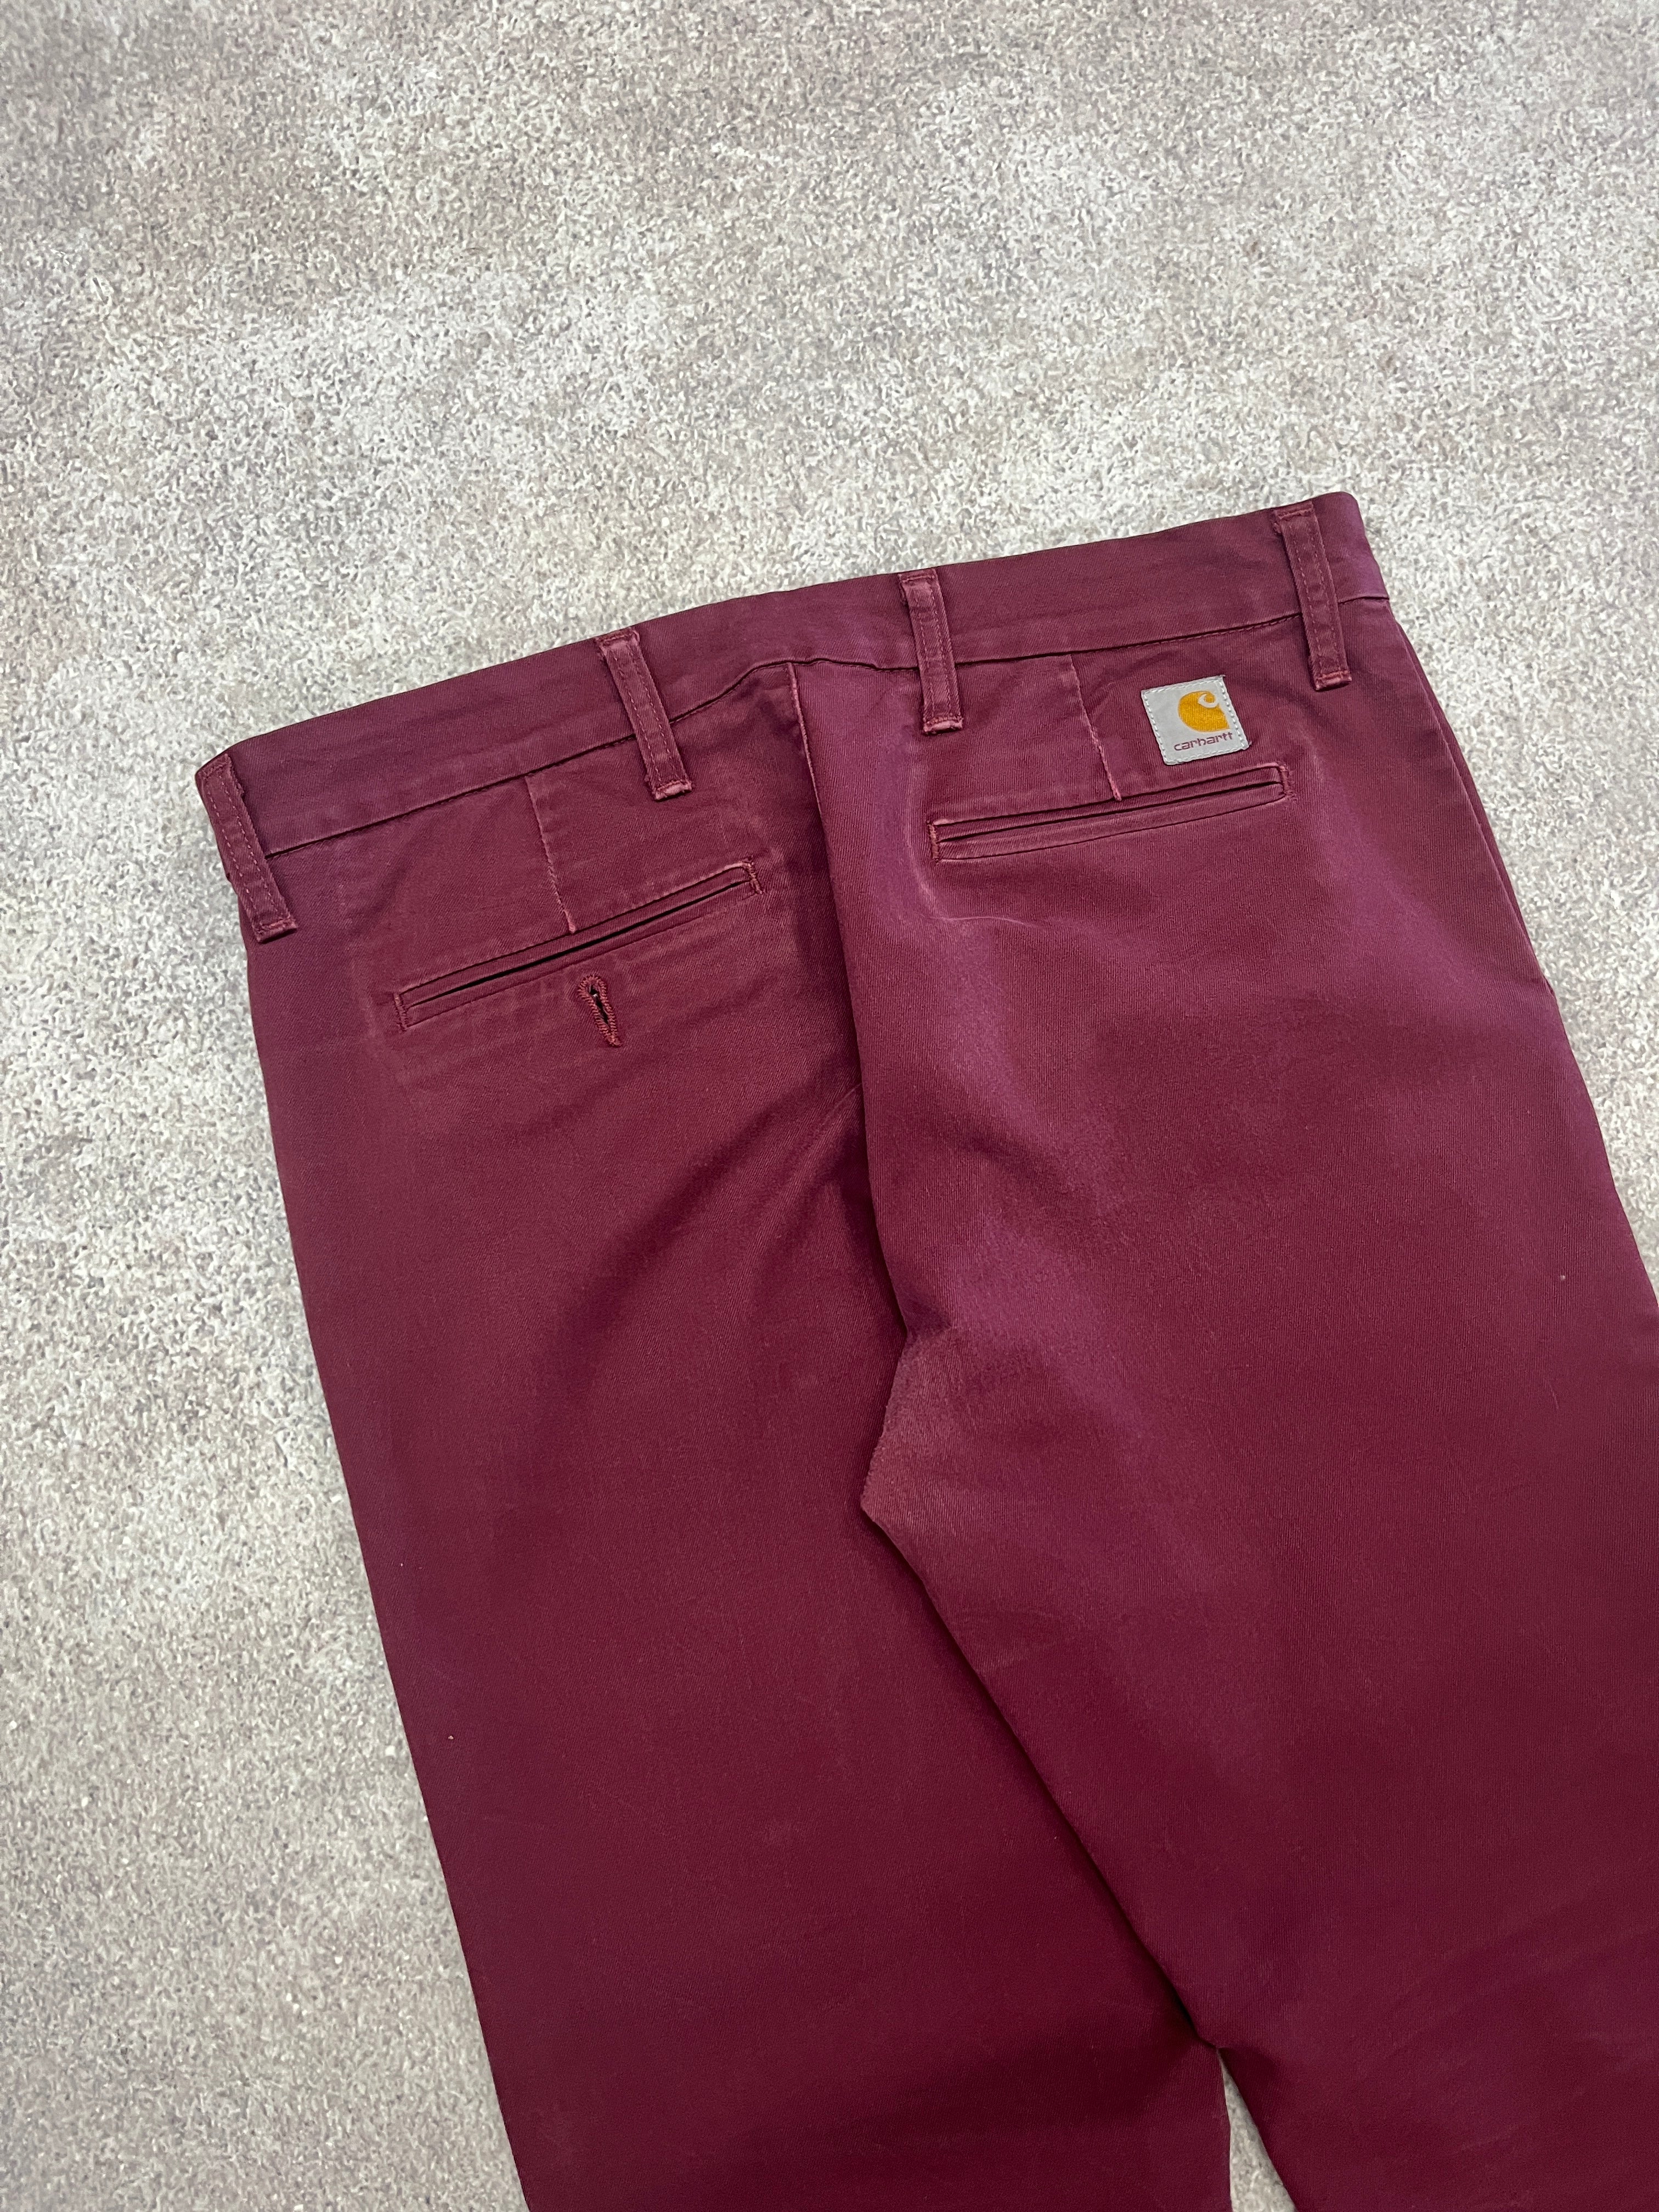 Vintage Carhartt Chino Pants Red // W32 L32 - RHAGHOUSE VINTAGE